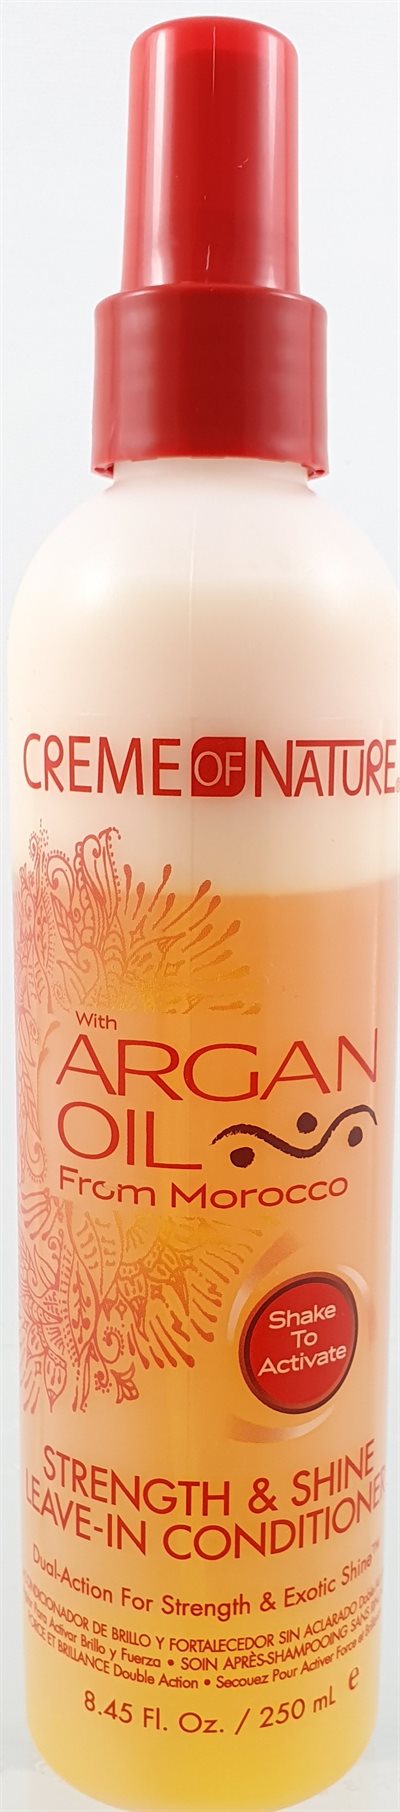 Creme of Nature - Argan Oil - Morocco 250 ml.